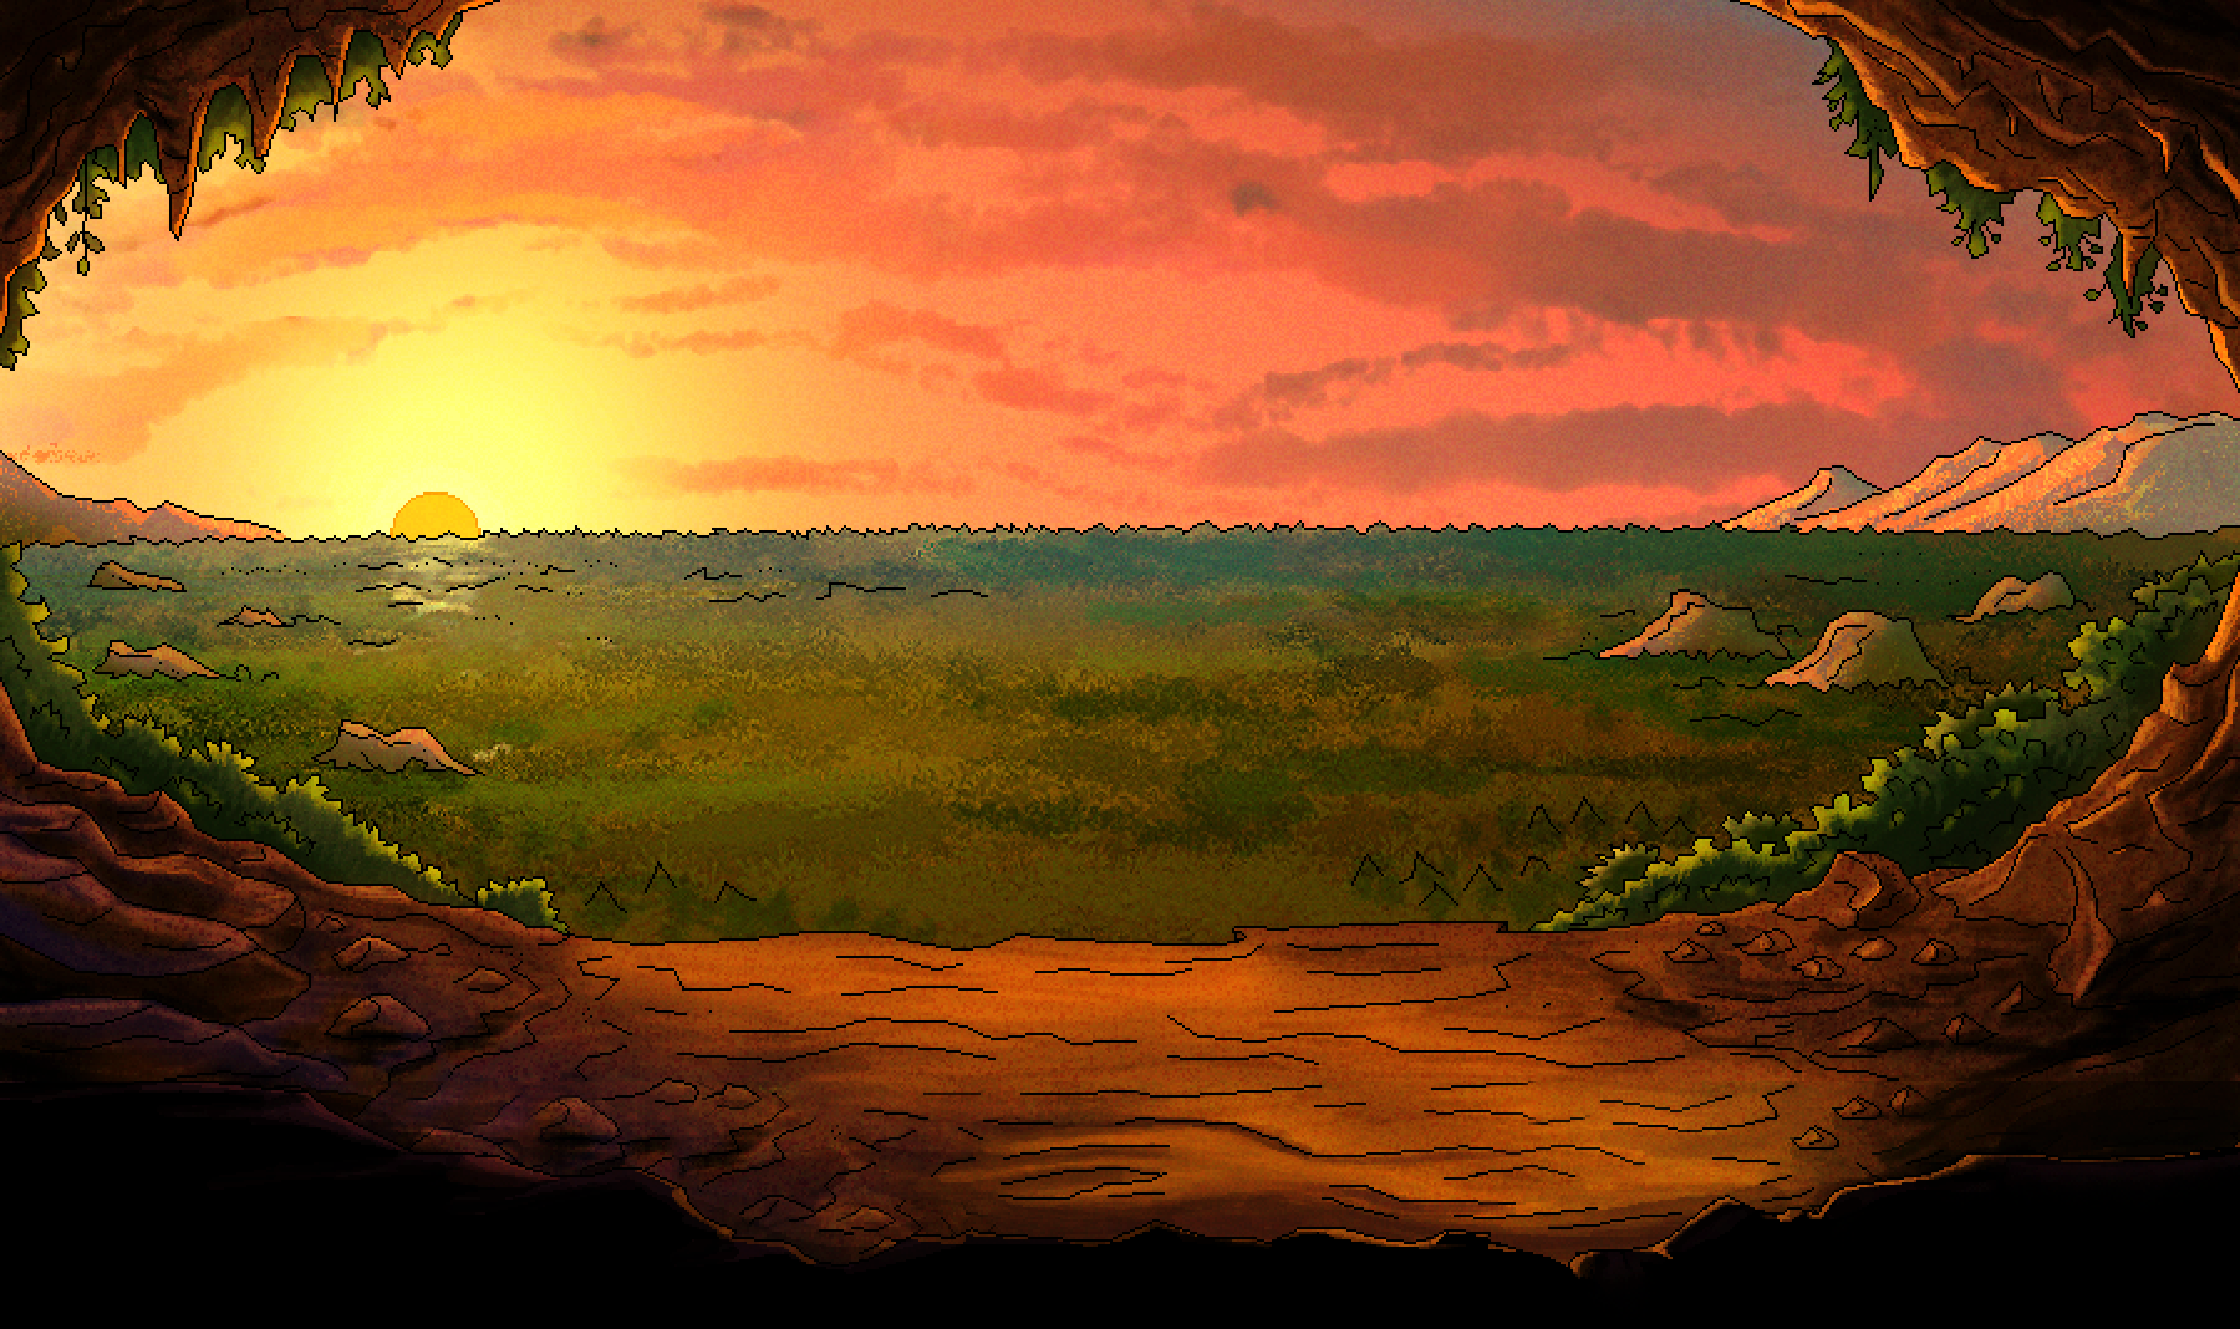 A pixel art landscape of a sunset over a forest